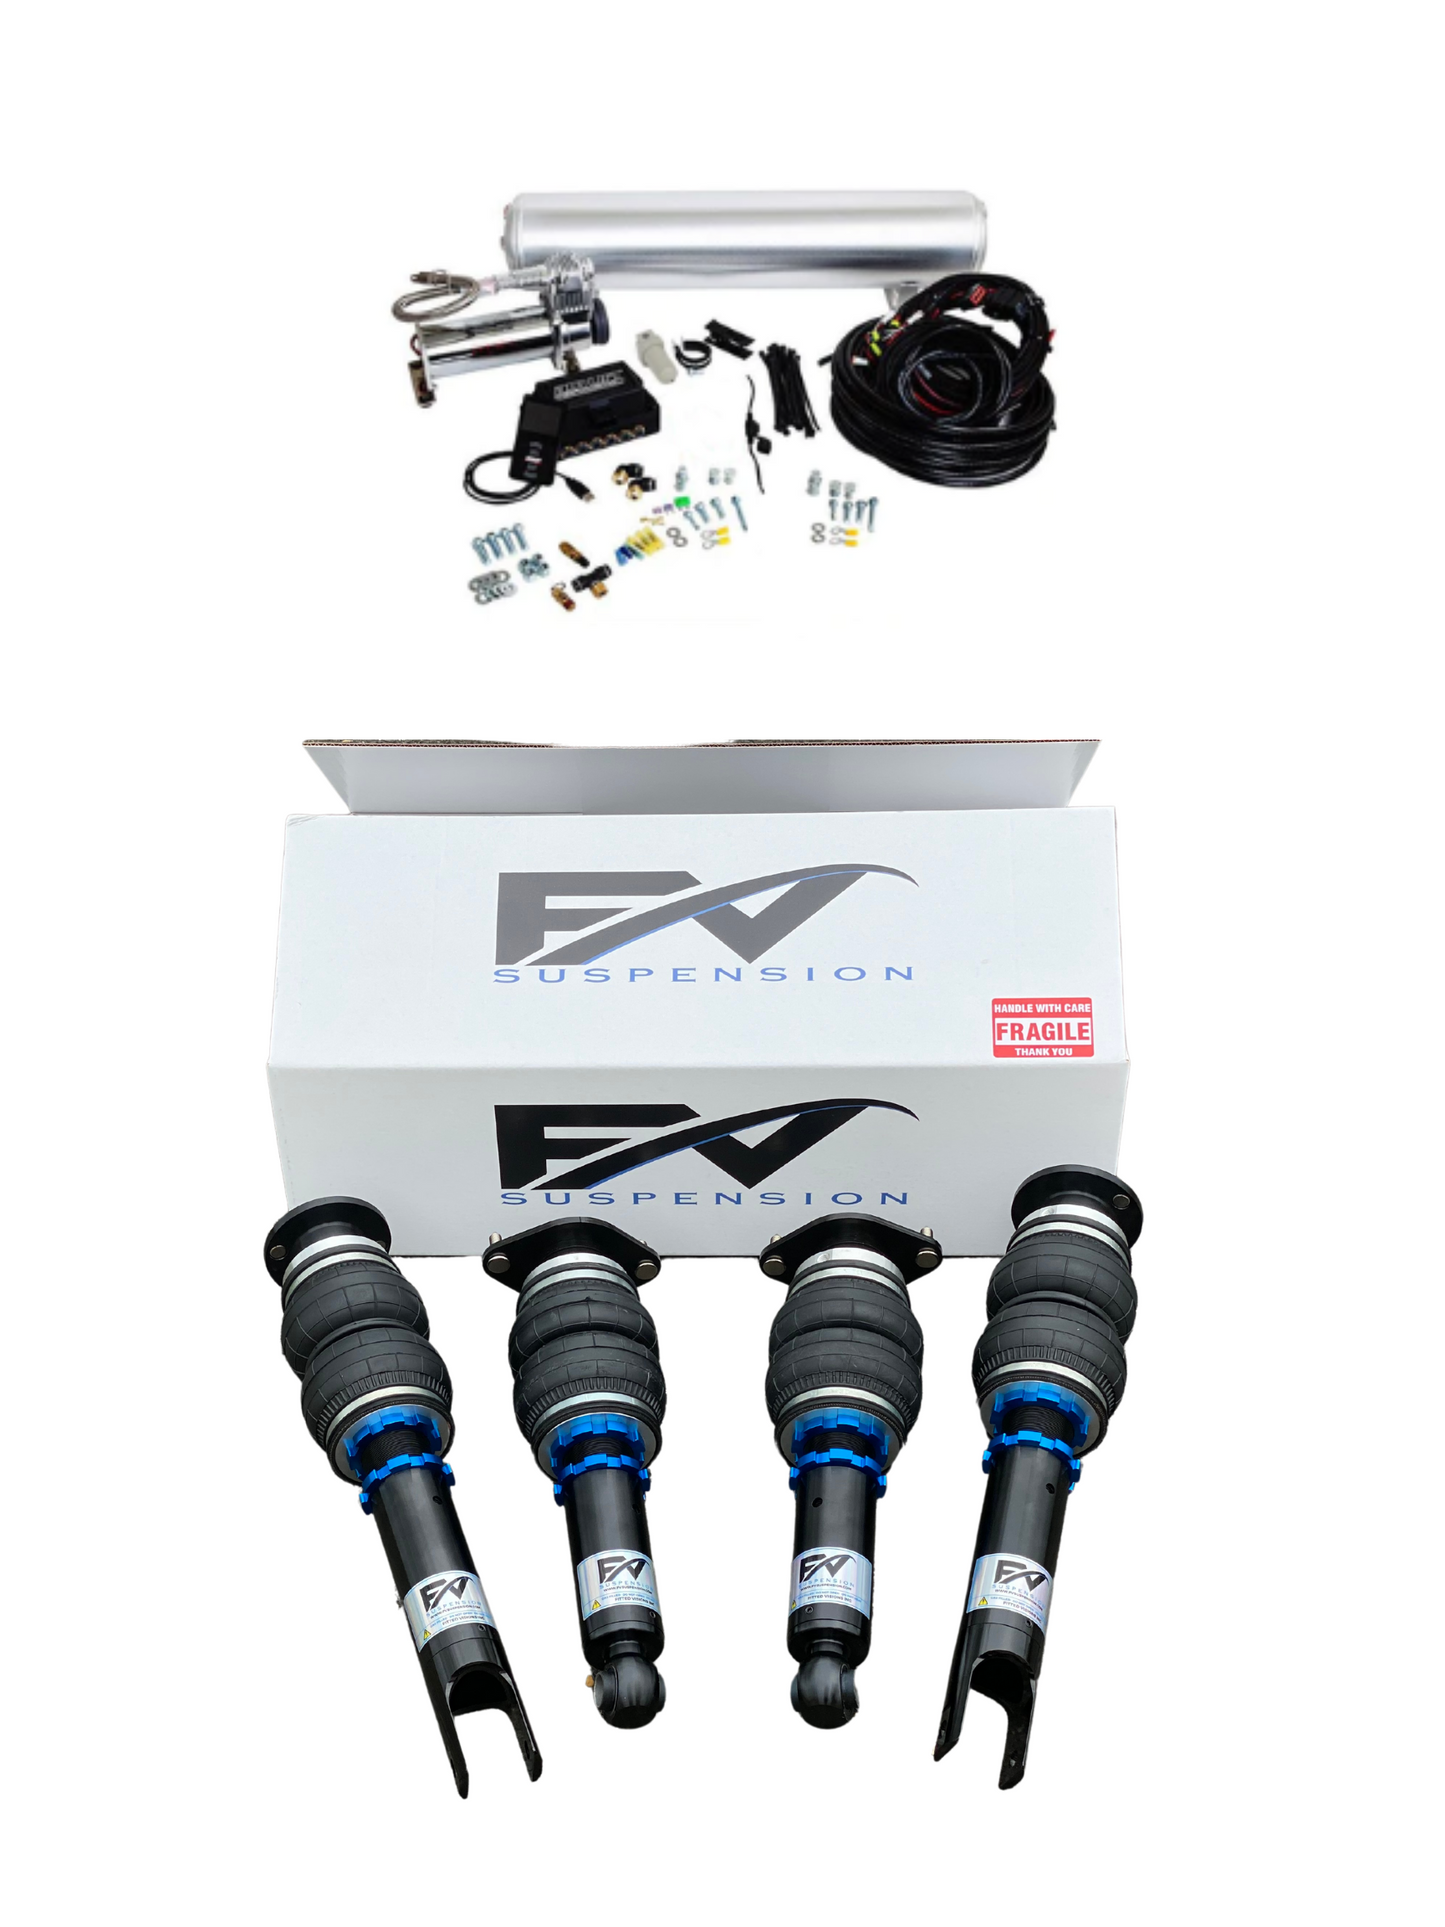 FV Suspension 3P Tier 2 Complete Air Ride kit for 2014+ Porsche Macan - FVALtier2kit582